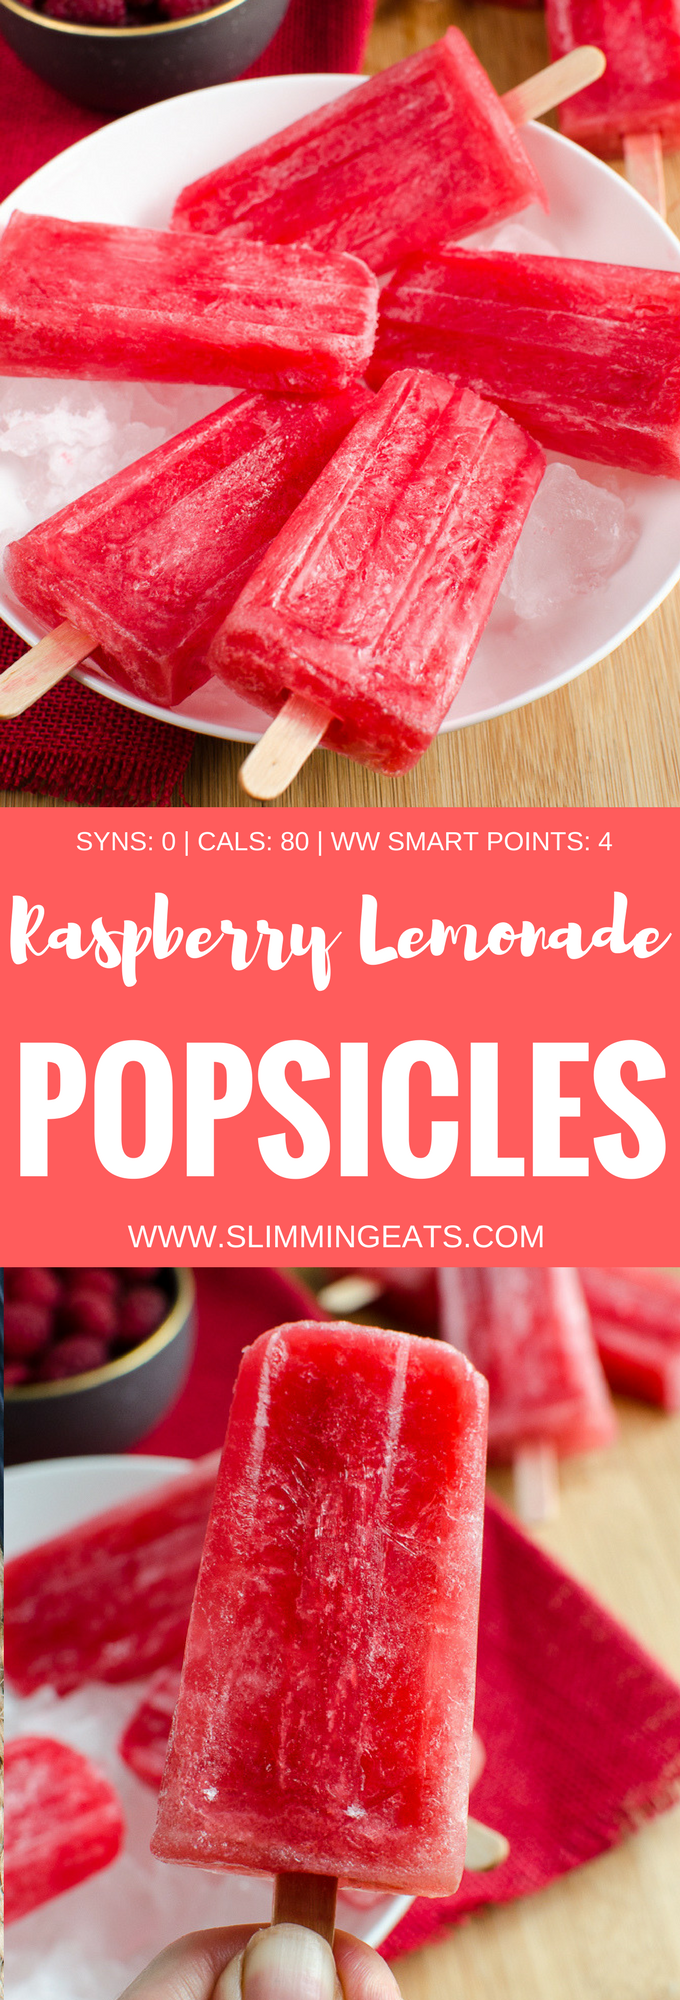 Slimming Eats Raspberry Lemonade Popsicles - gluten free, dairy free, vegetarian, Slimming World and Weight Watchers friendly